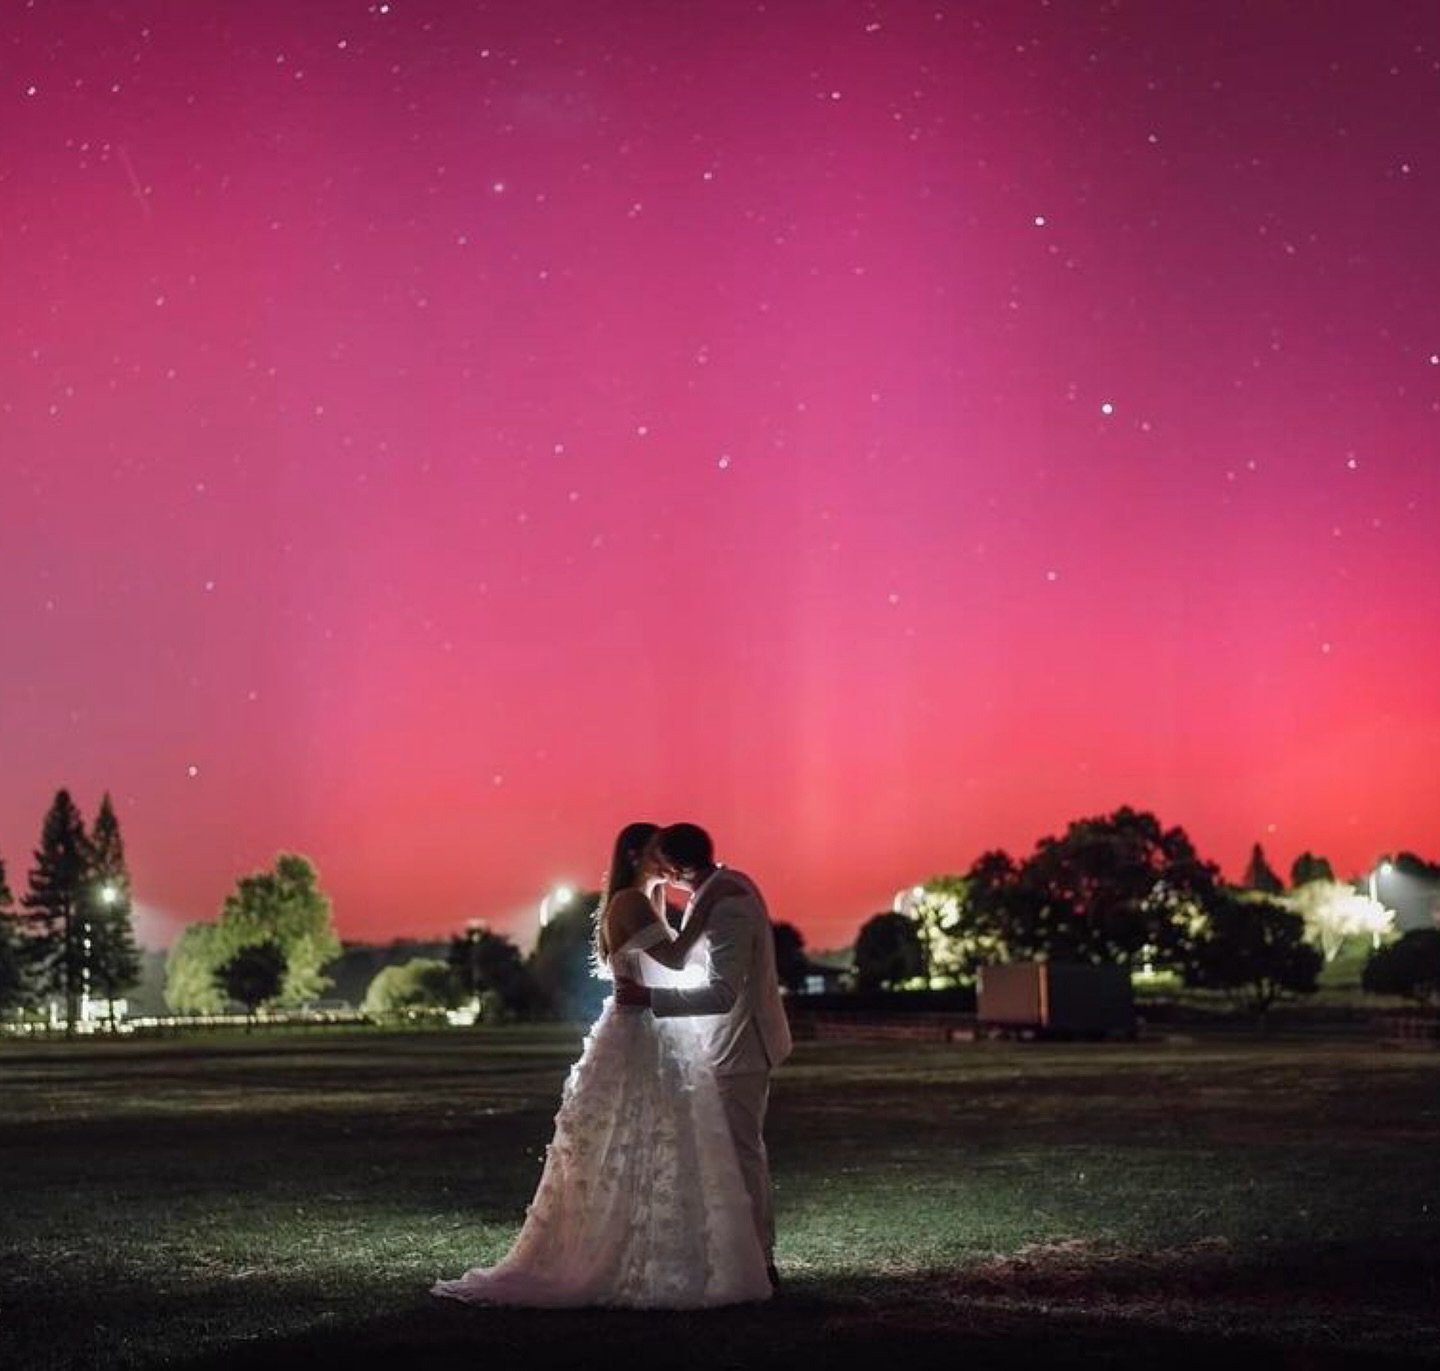 💜🩷❤️ !WOW! 💜🩷❤️ 
Eve &amp; Kelsin wedding portrait with the stunning Aurora Australis ~ captured last night by @gregcampbell.photo ✨
.
.
.
#auroraaustralis #auroraaustralisnz #nzbrideandgroom #onceinalifetime #aurora